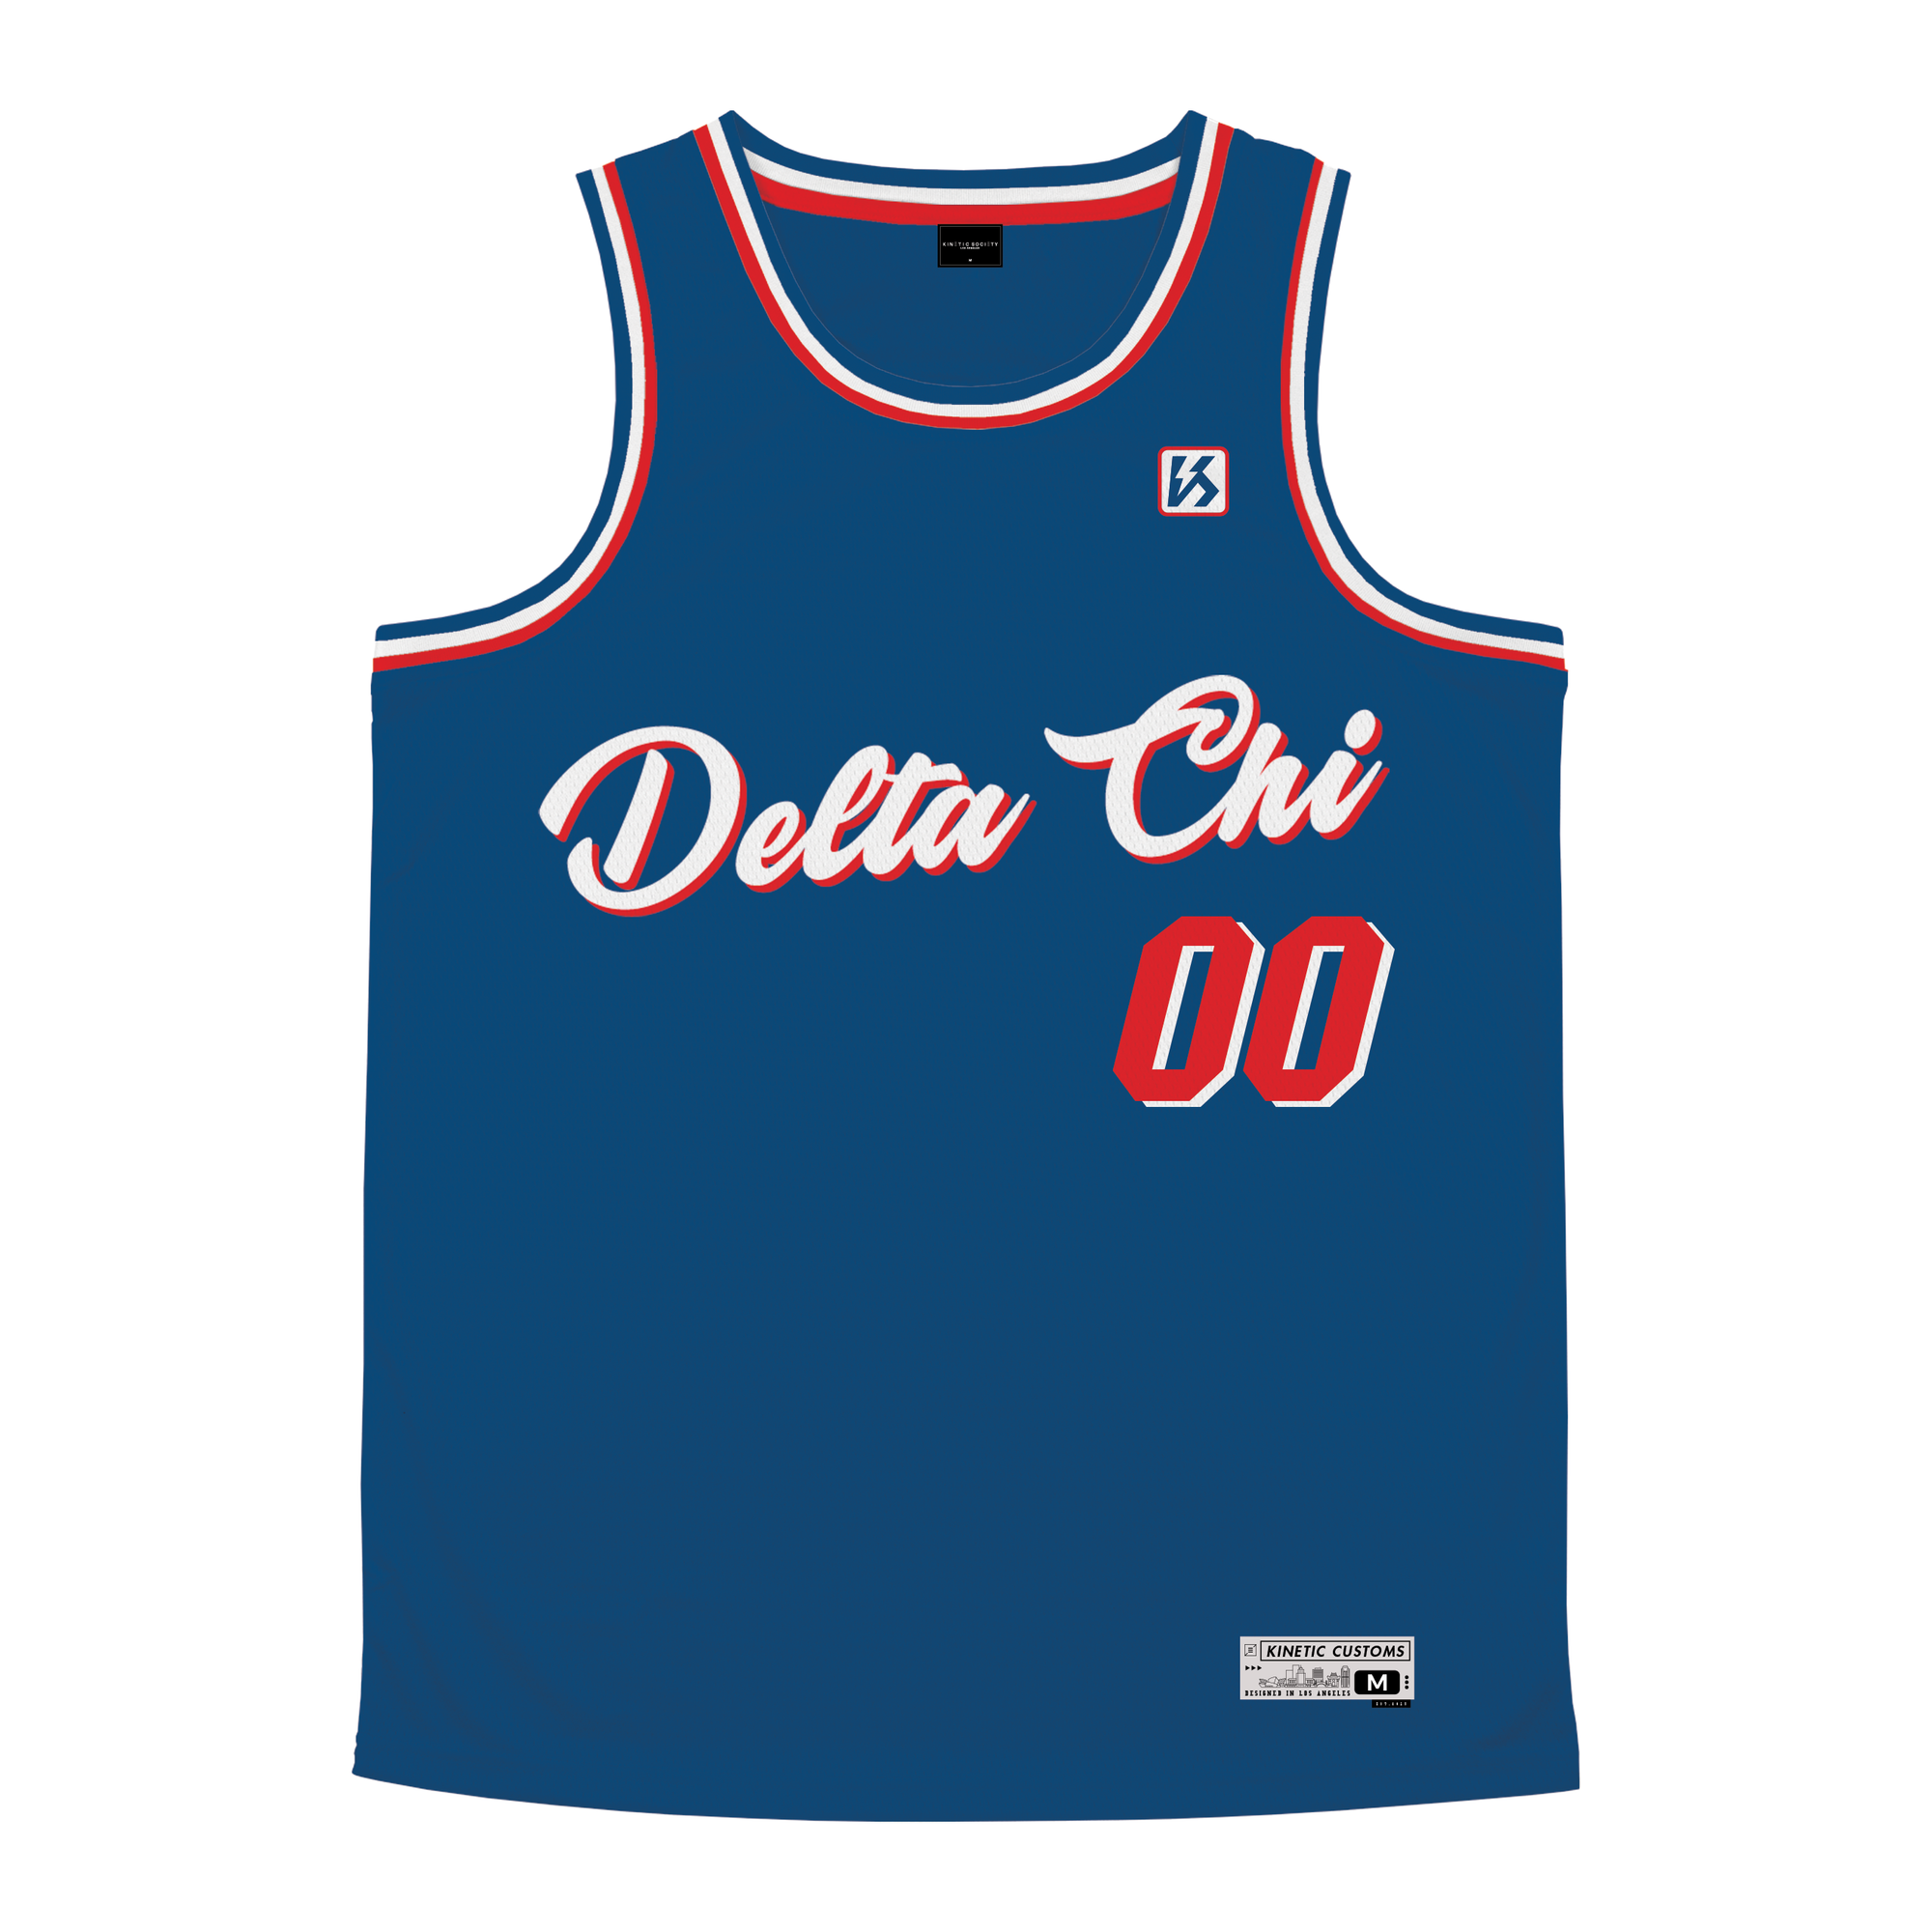 Delta Chi - The Dream Basketball Jersey